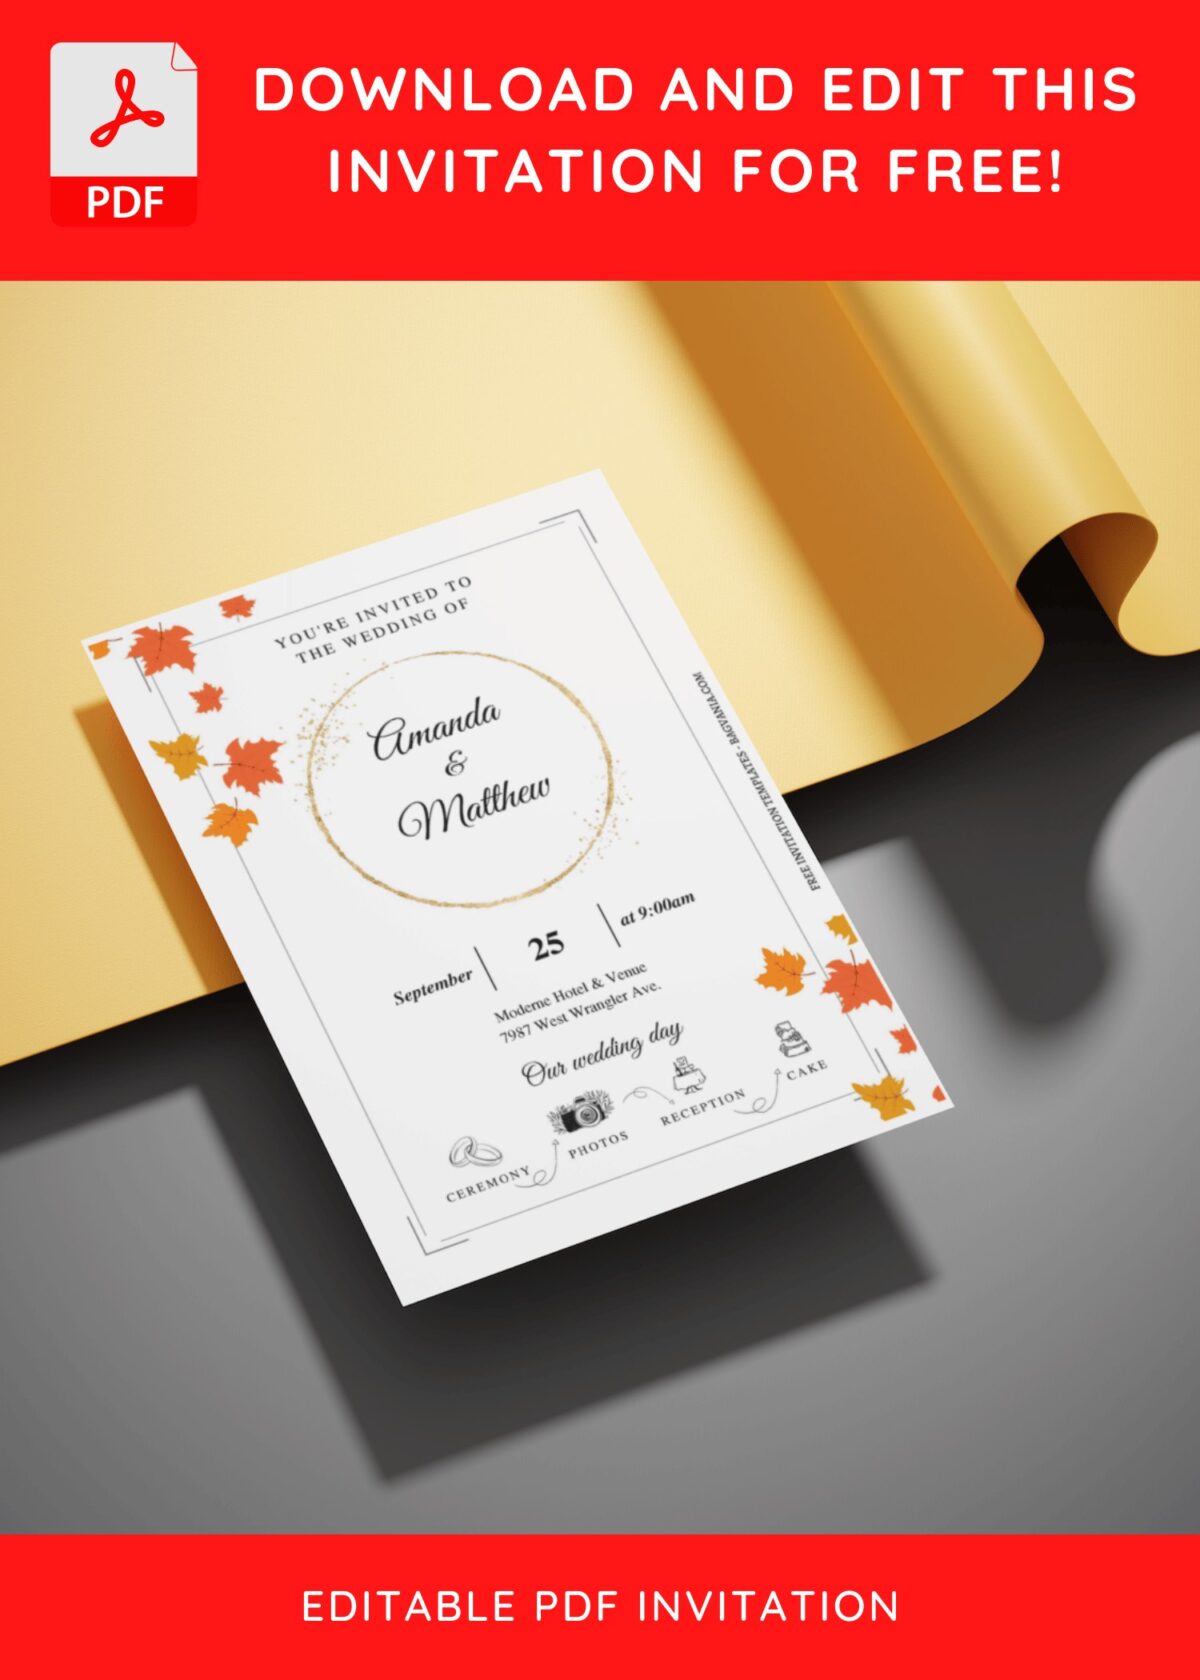 (Free Editable PDF) Wonderful Autumn Wedding Invitation Templates E